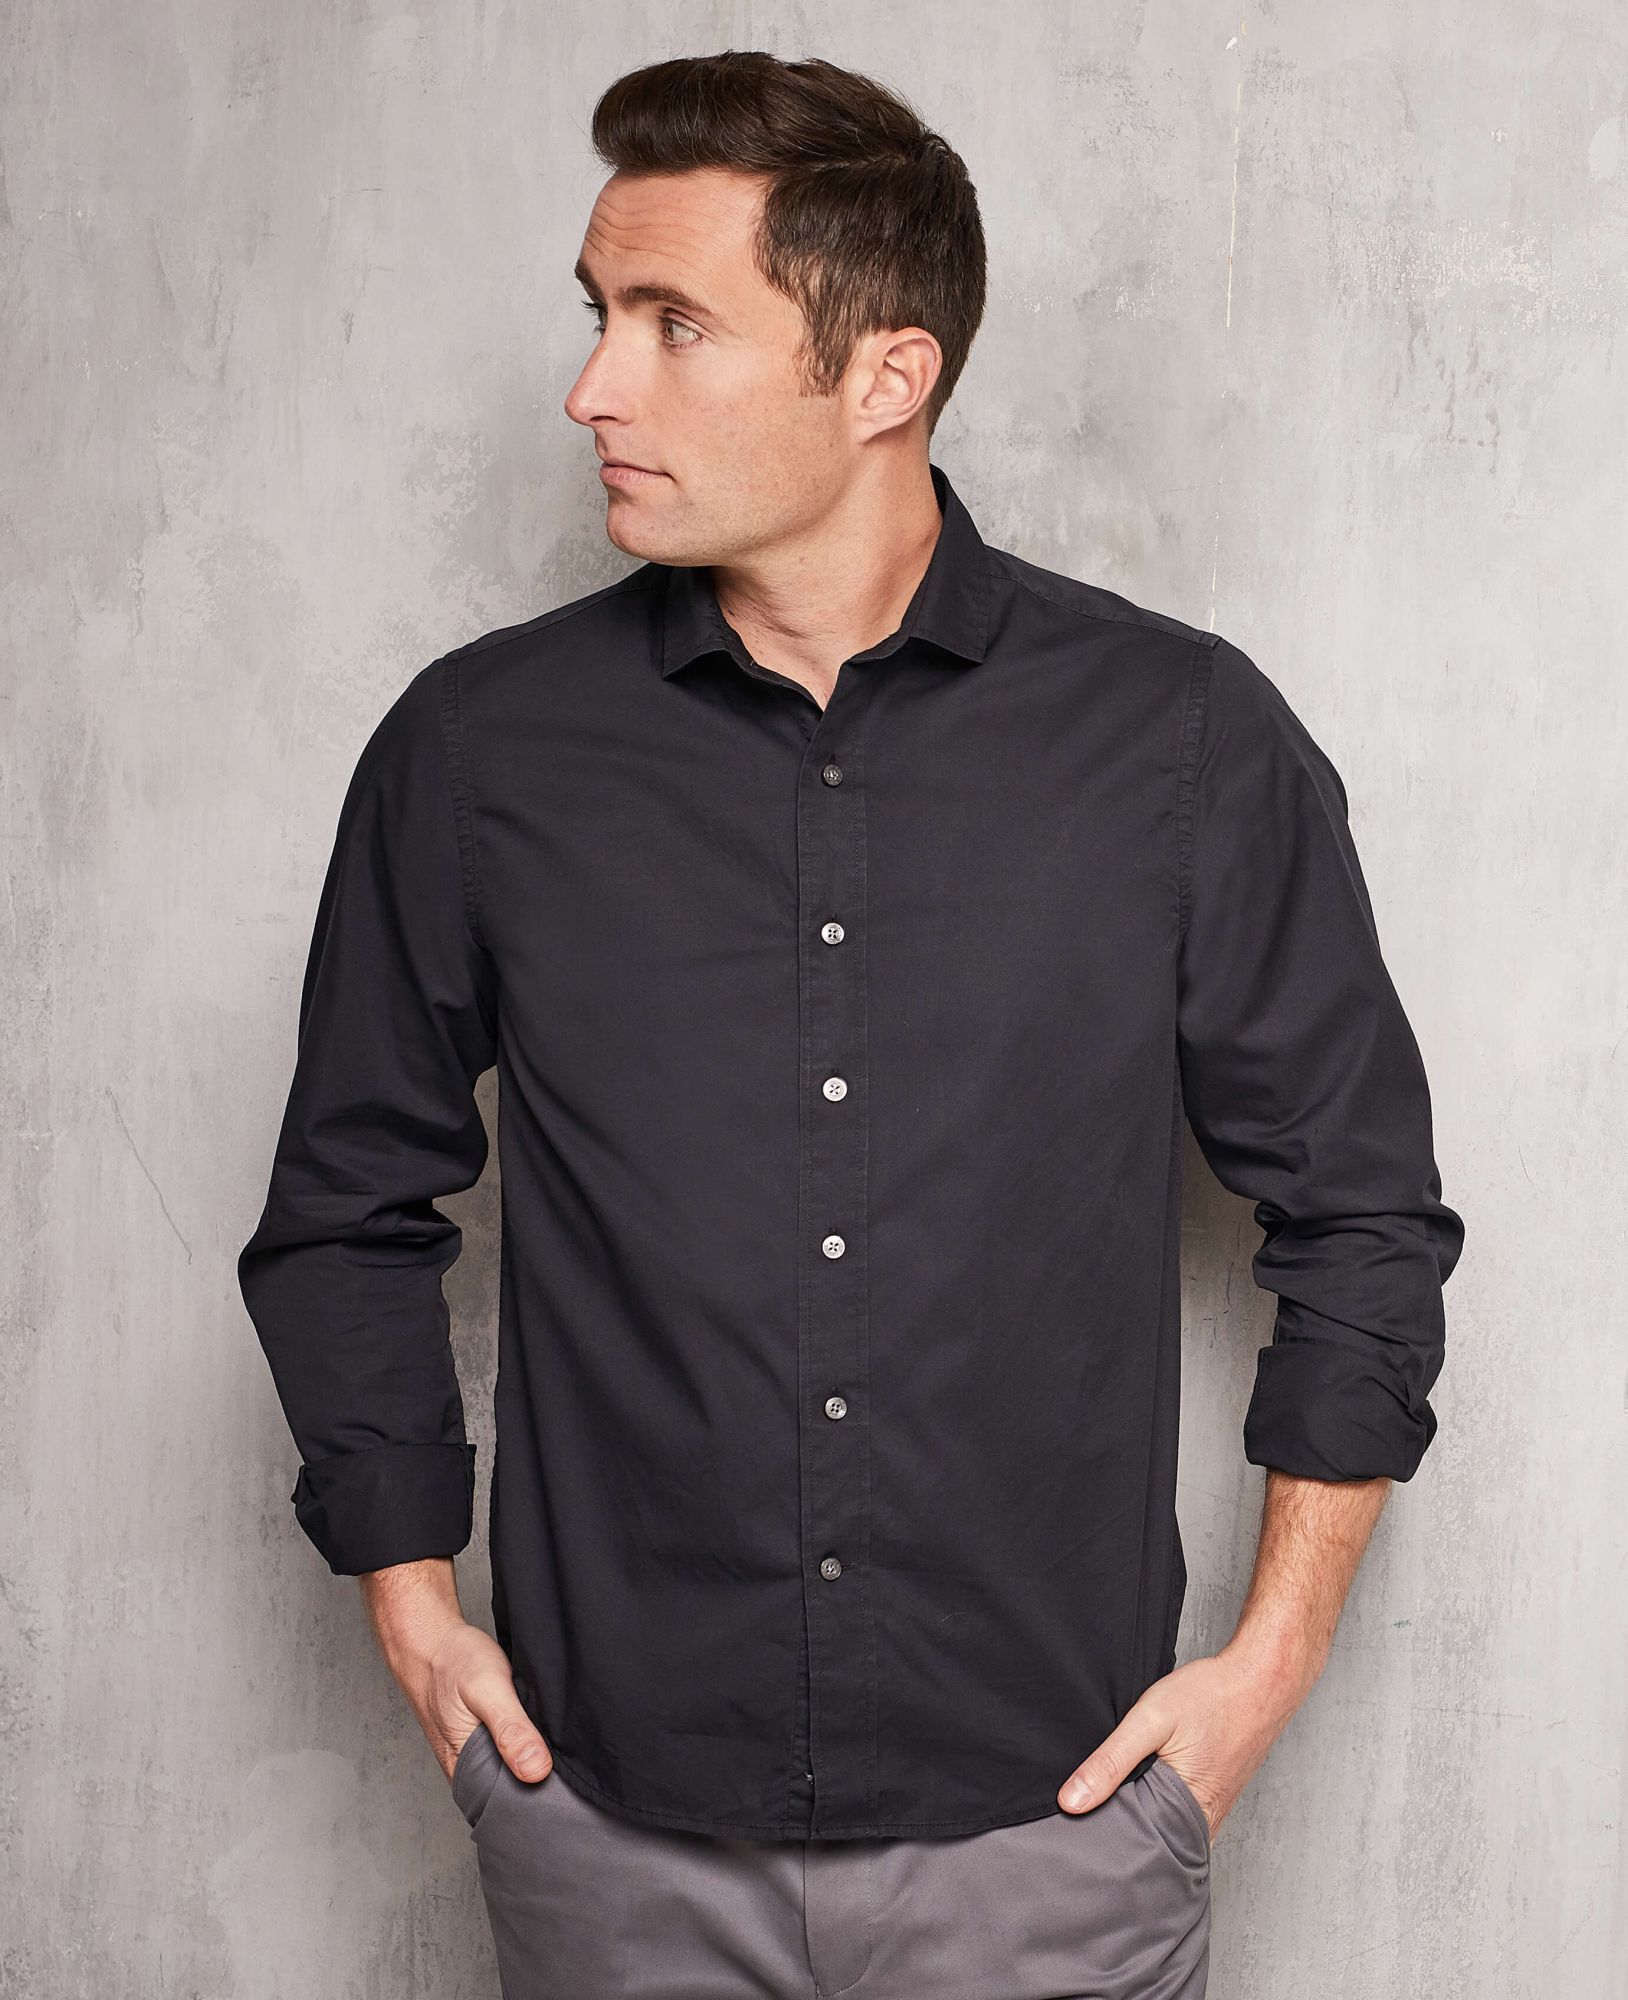 Black Twill Slim Fit Shirt in Shorter Length M Lengthen by 2